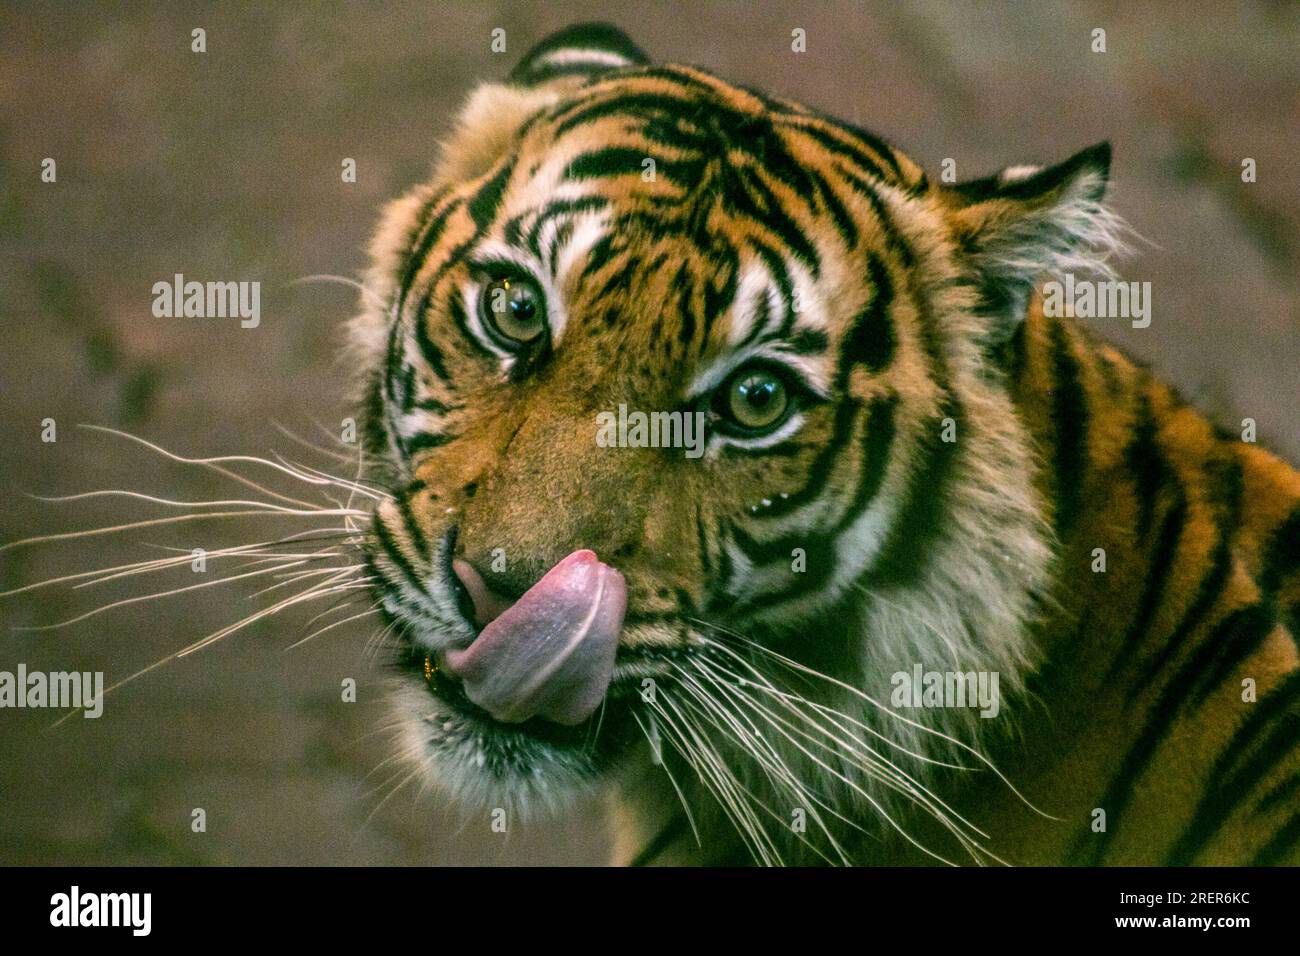 Subspecies of Tigers in the World - Taman Safari Bali